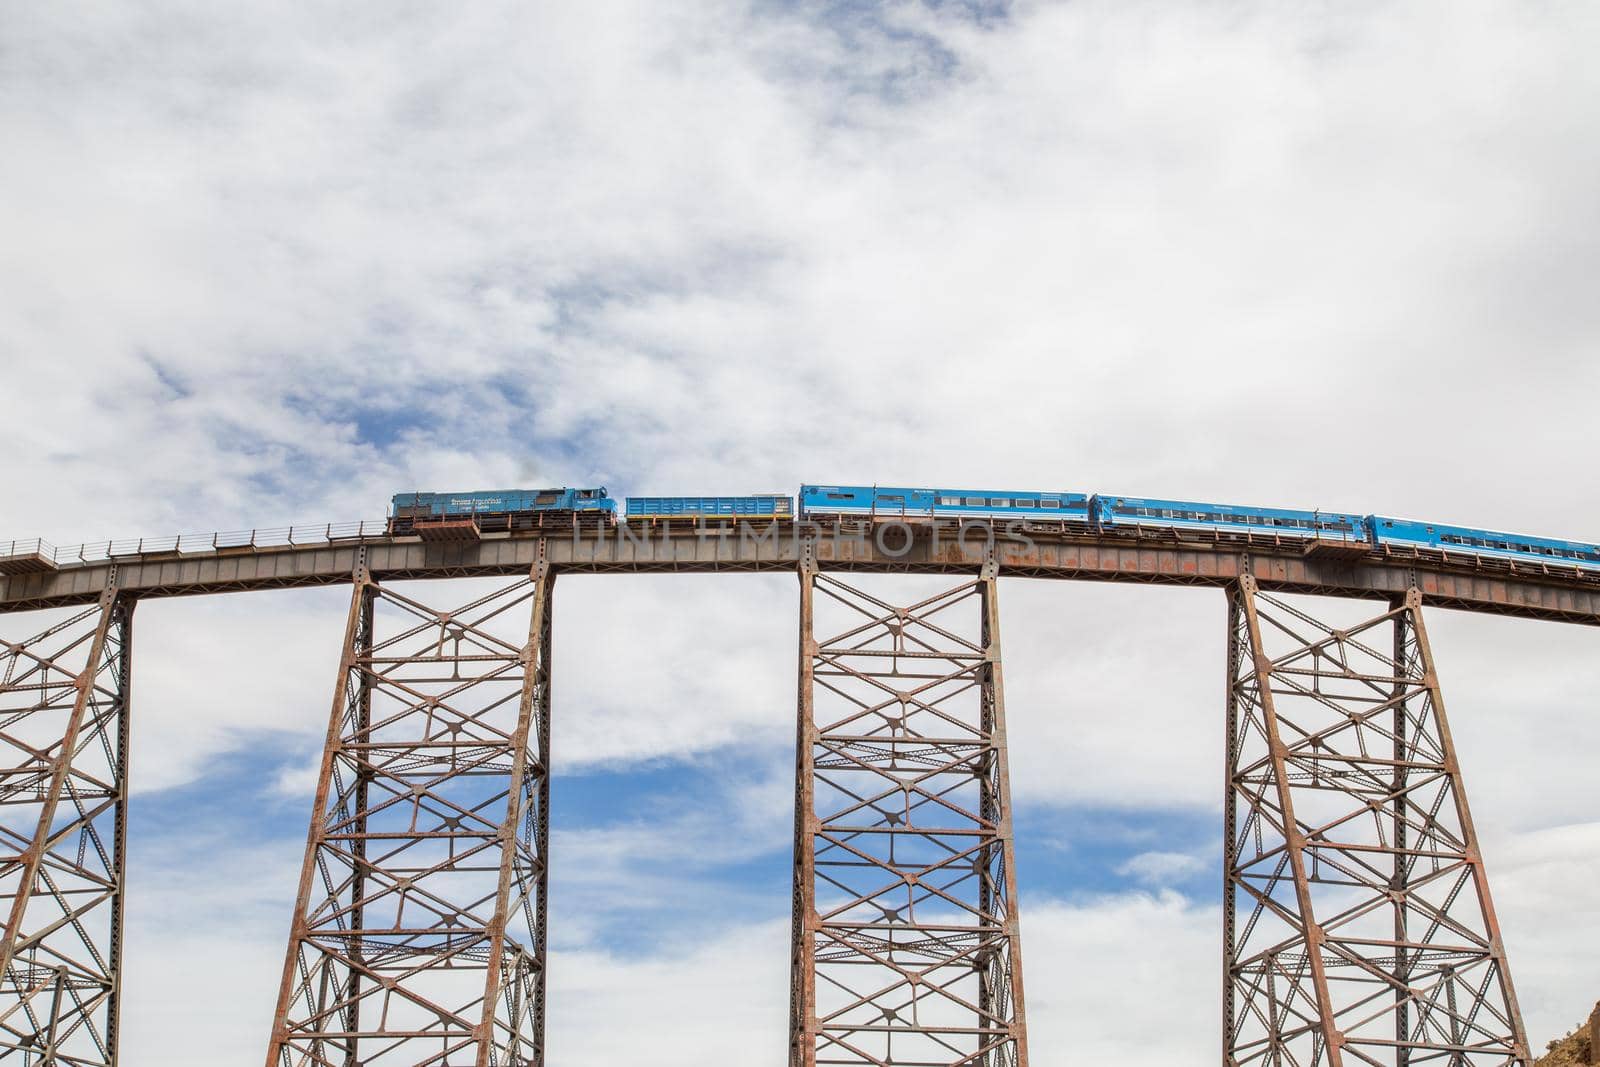 Polvorilla, Argentina - November 14, 2015: Train on top of Polvorilla viaduct